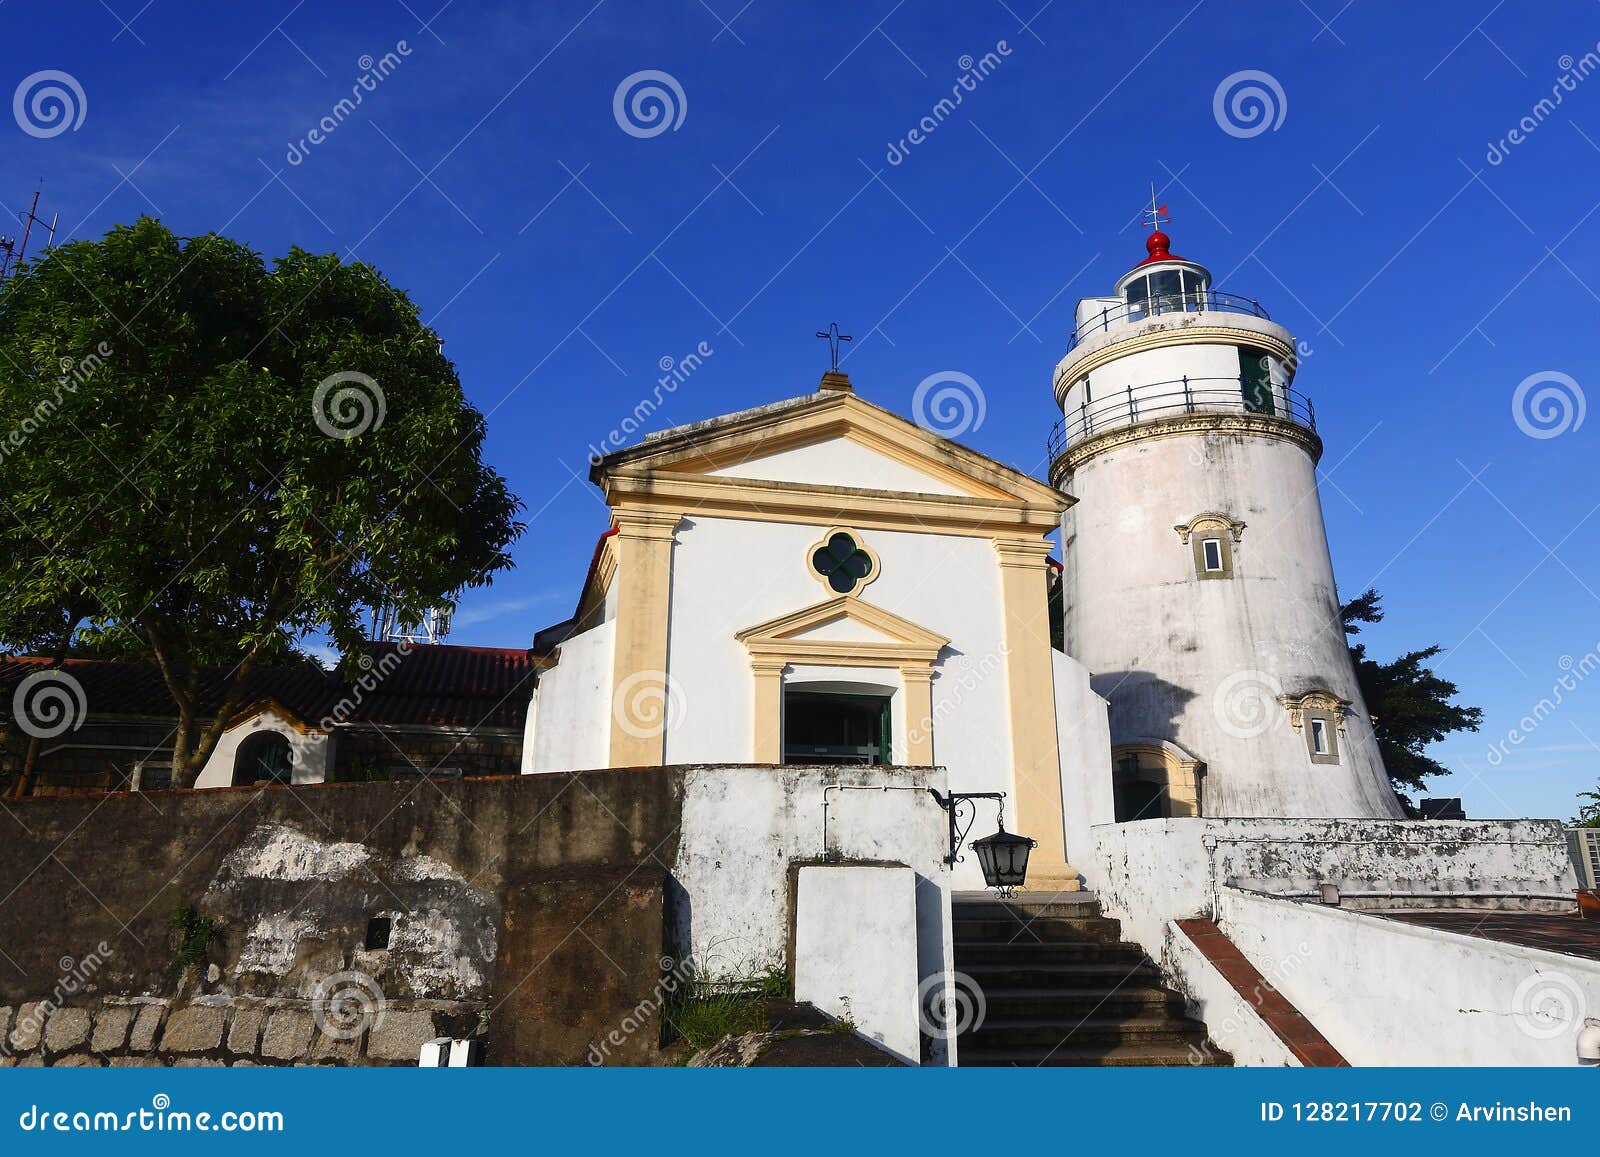 guia lighthouse in macau